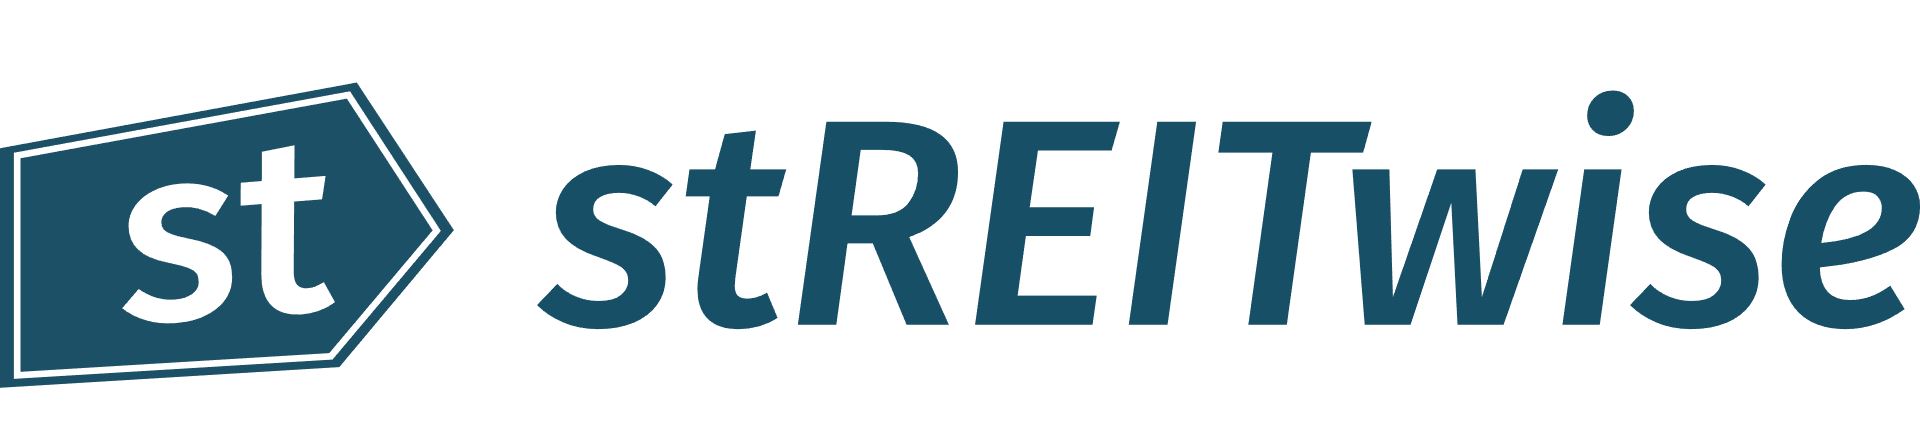 1st stREIT Office Inc. Company Logo